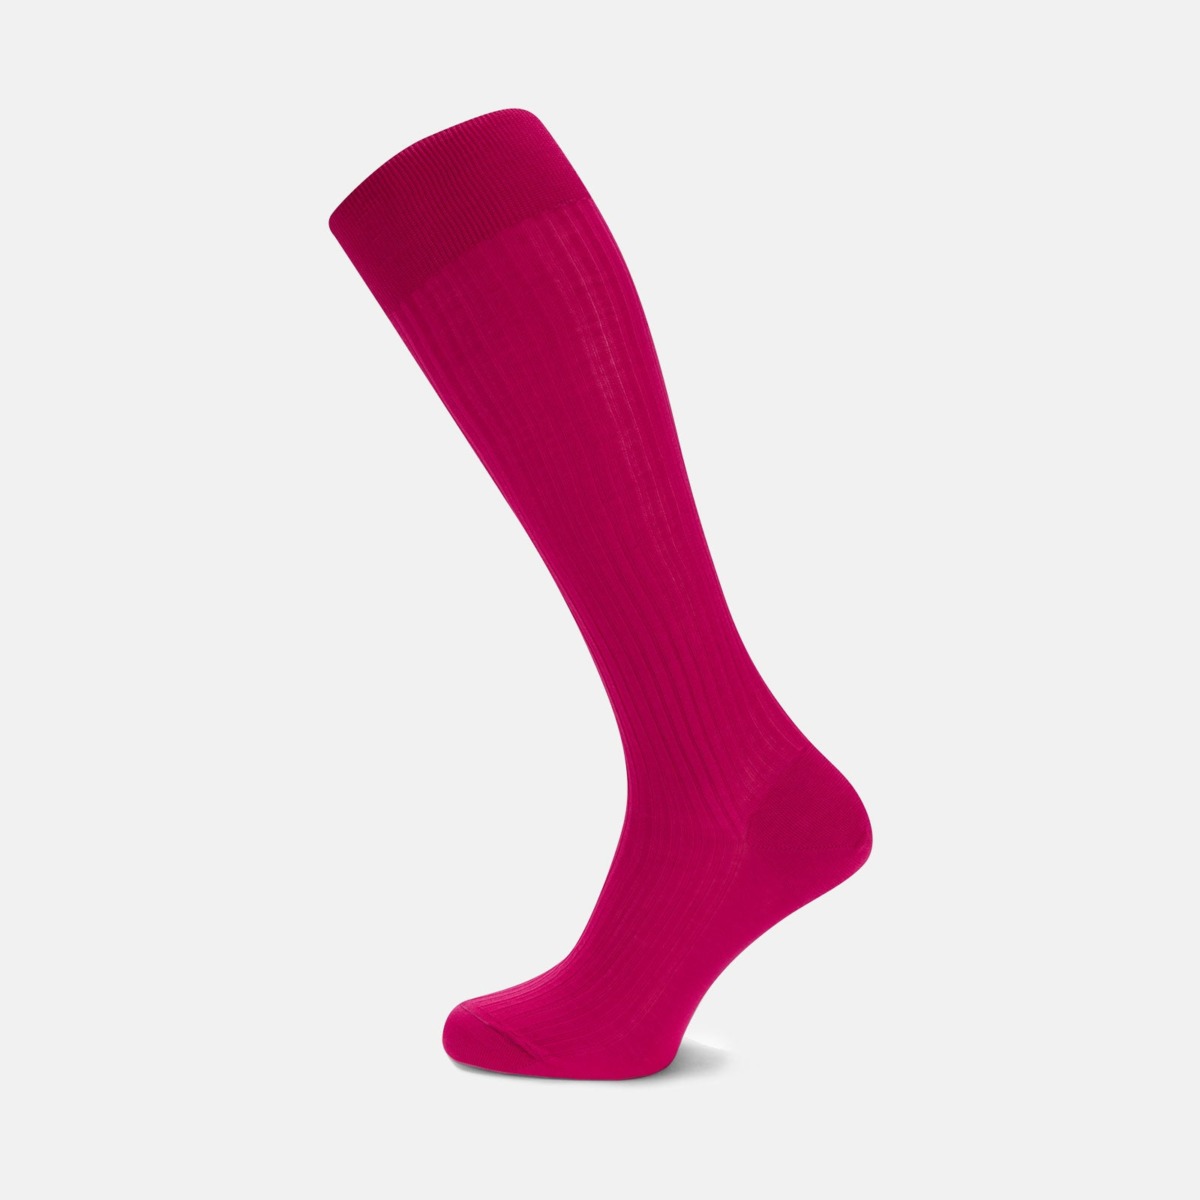 Turnbull And Asser - Pink Socks Turnbull & Asser GOOFASH